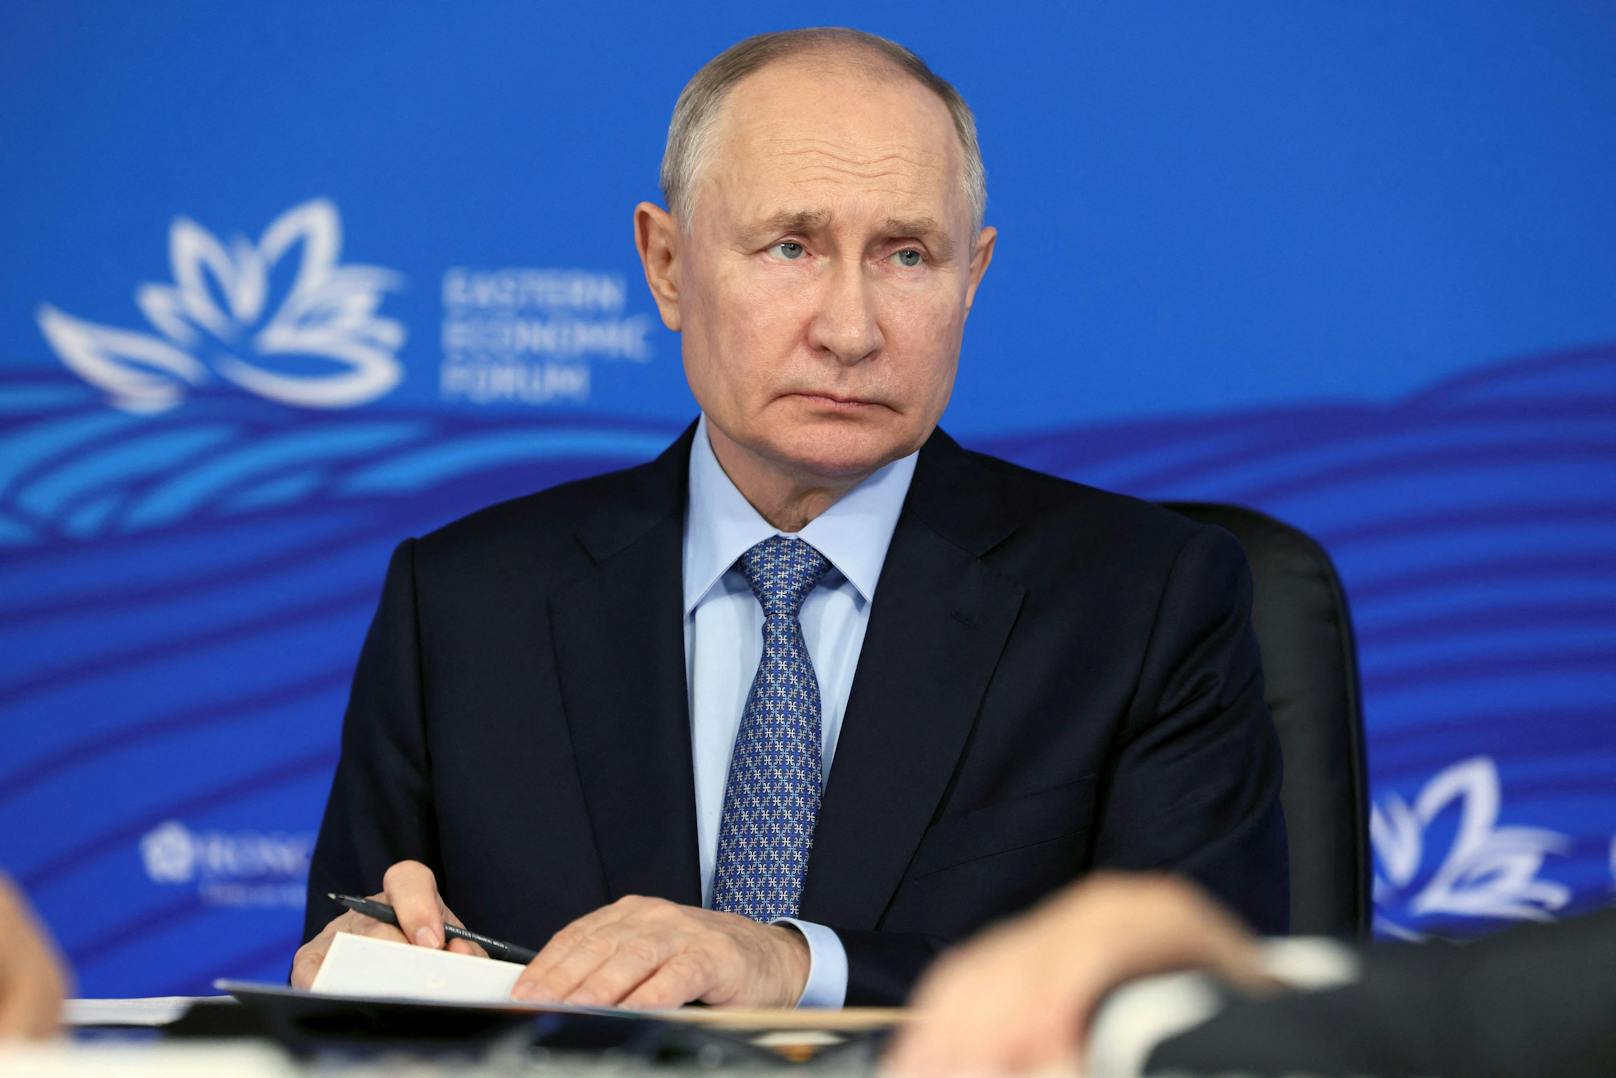 USA spotten über Putin: "Muss bei Kim um Hilfe betteln"